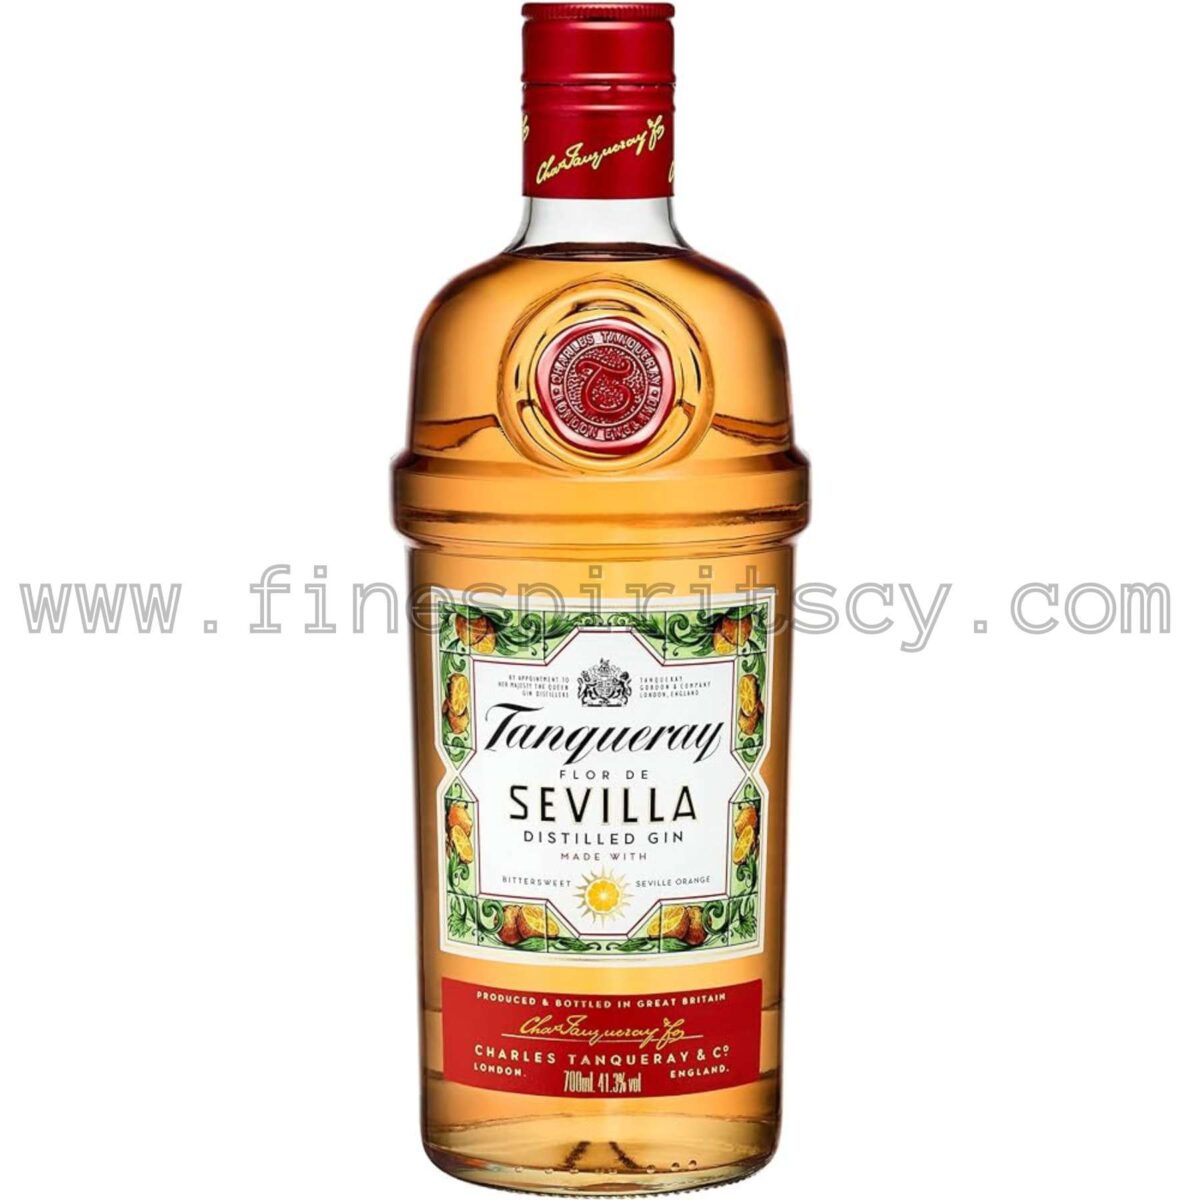 Tanqueray Flor De Sevilla Gin Cyprus Price Online Order 700ml 70cl 0.7L Buy